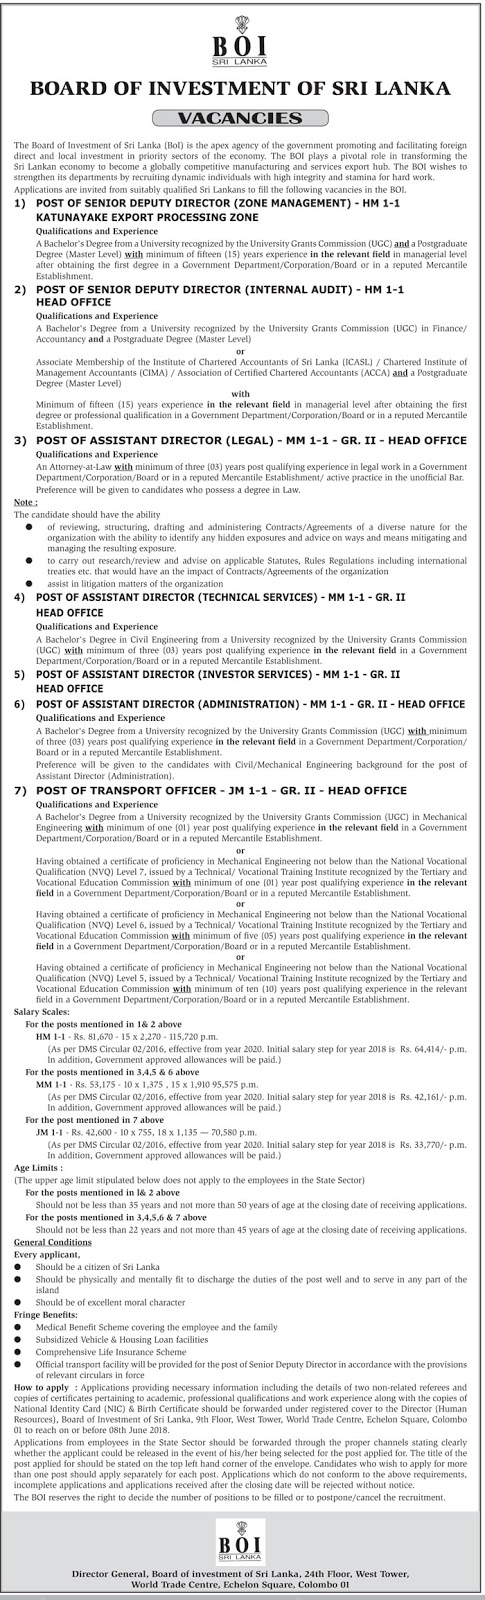 Transport Officer / Senior Deputy Director / Assistant Director - Board of Investment of Sri Lanka Jobs Vacancies